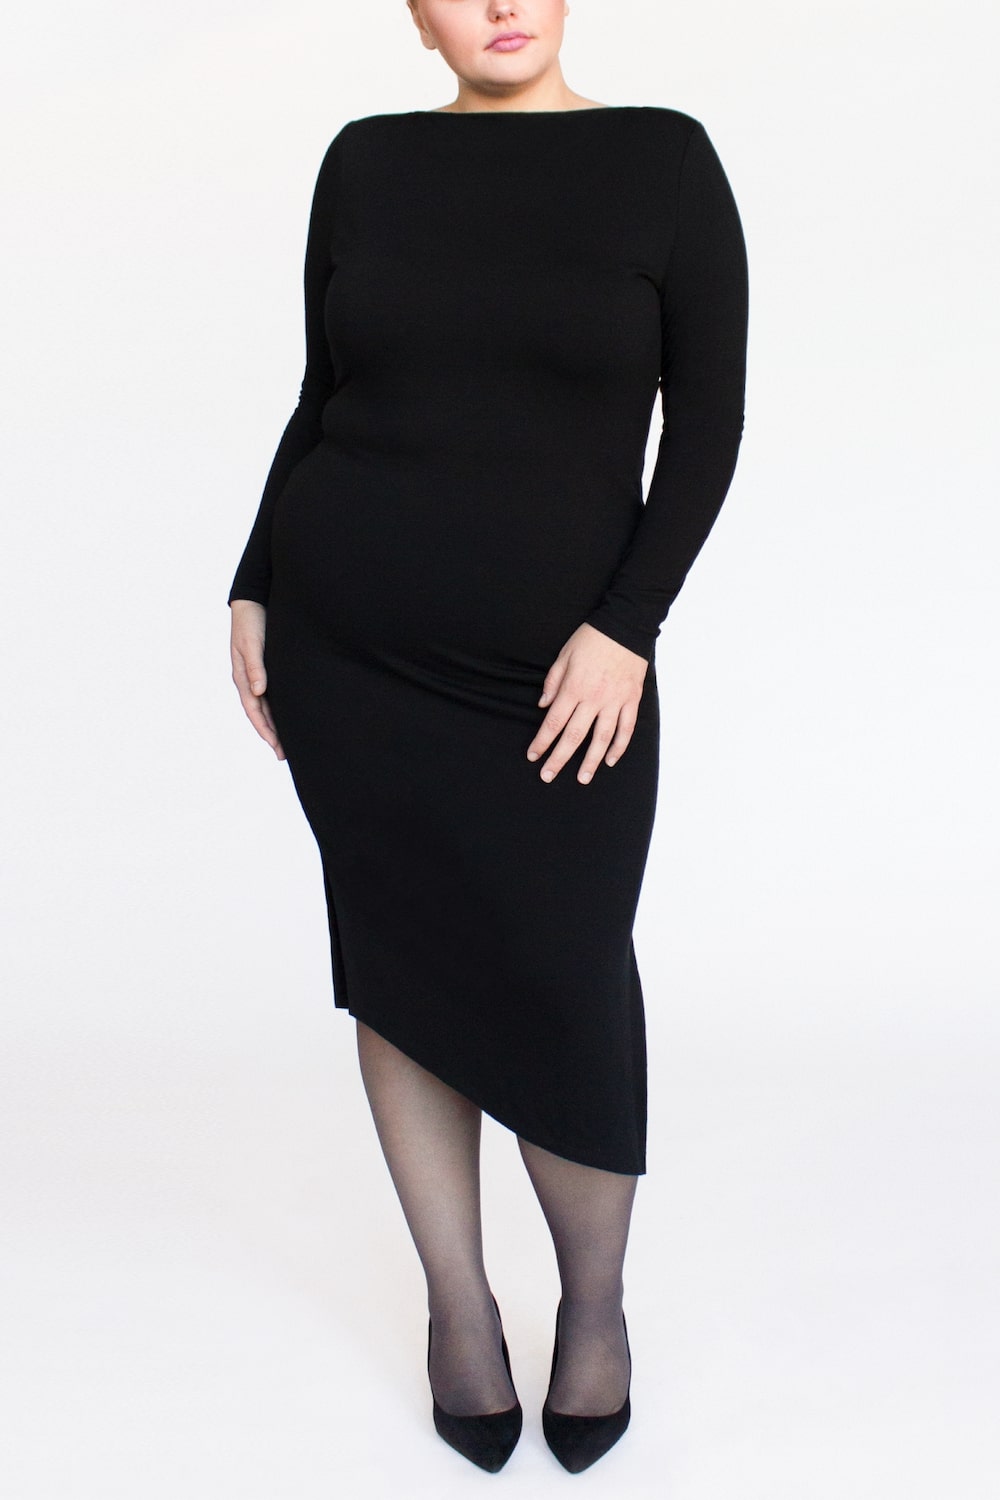 Antonio Melani Avery Round Neck Cap Sleeve Wool Blend Sheath Bodycon Dress  | Dillard's | Dress, Shopping outfit, Bodycon dress